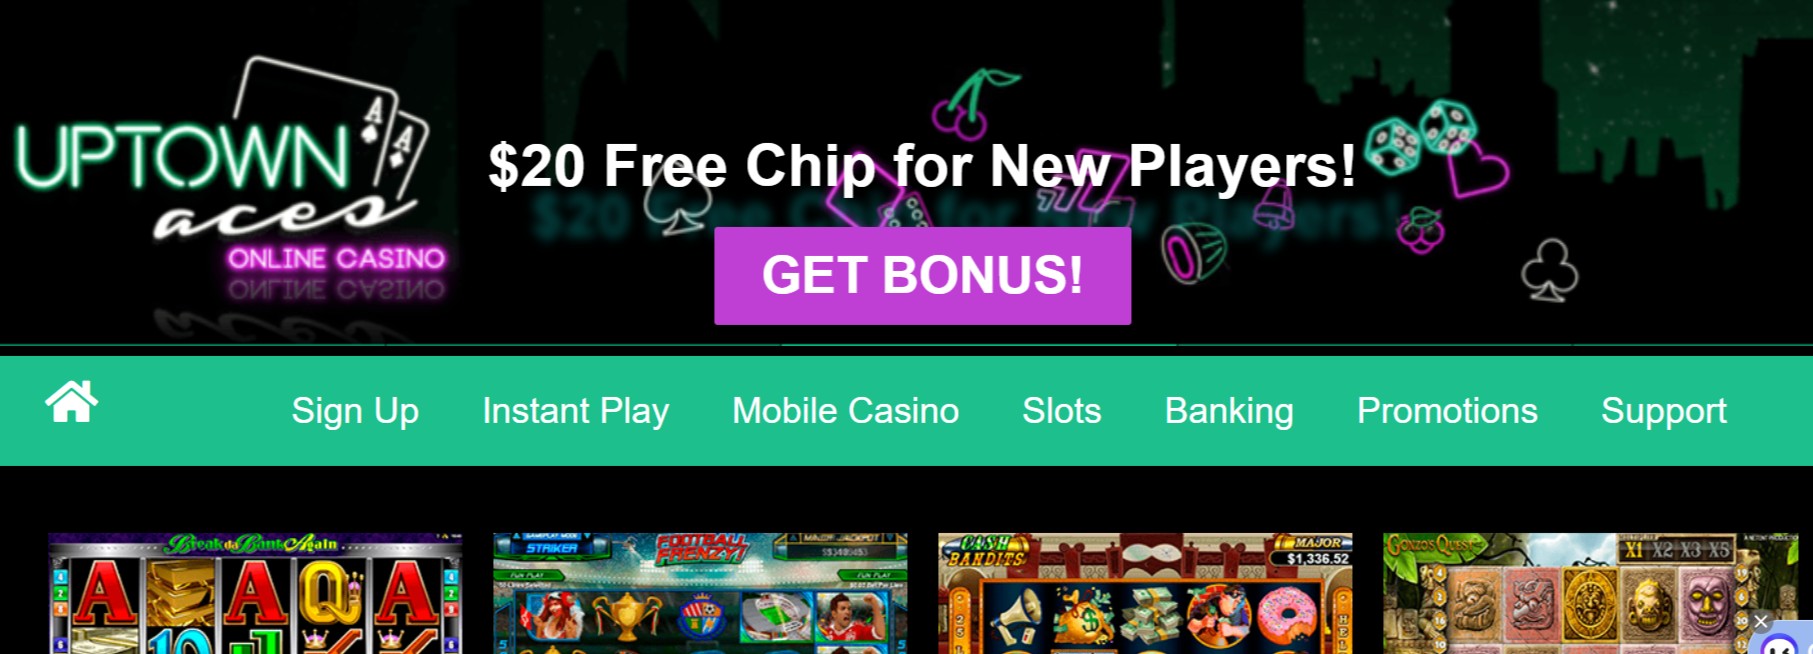 uptown aces casino website homepage screenshot